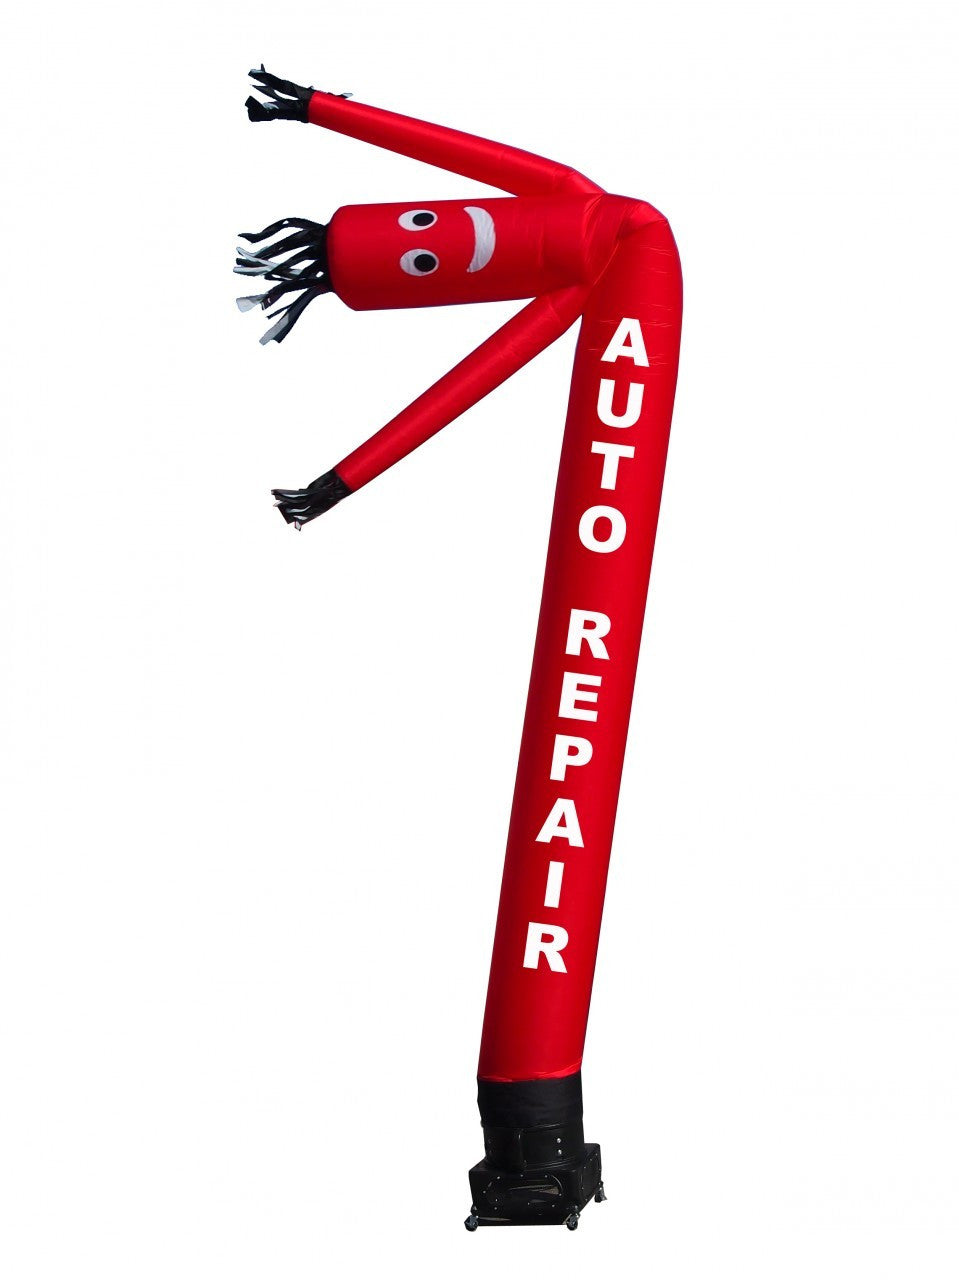 20ft Auto Repair Red Air Dancer Tube Man Inflatables